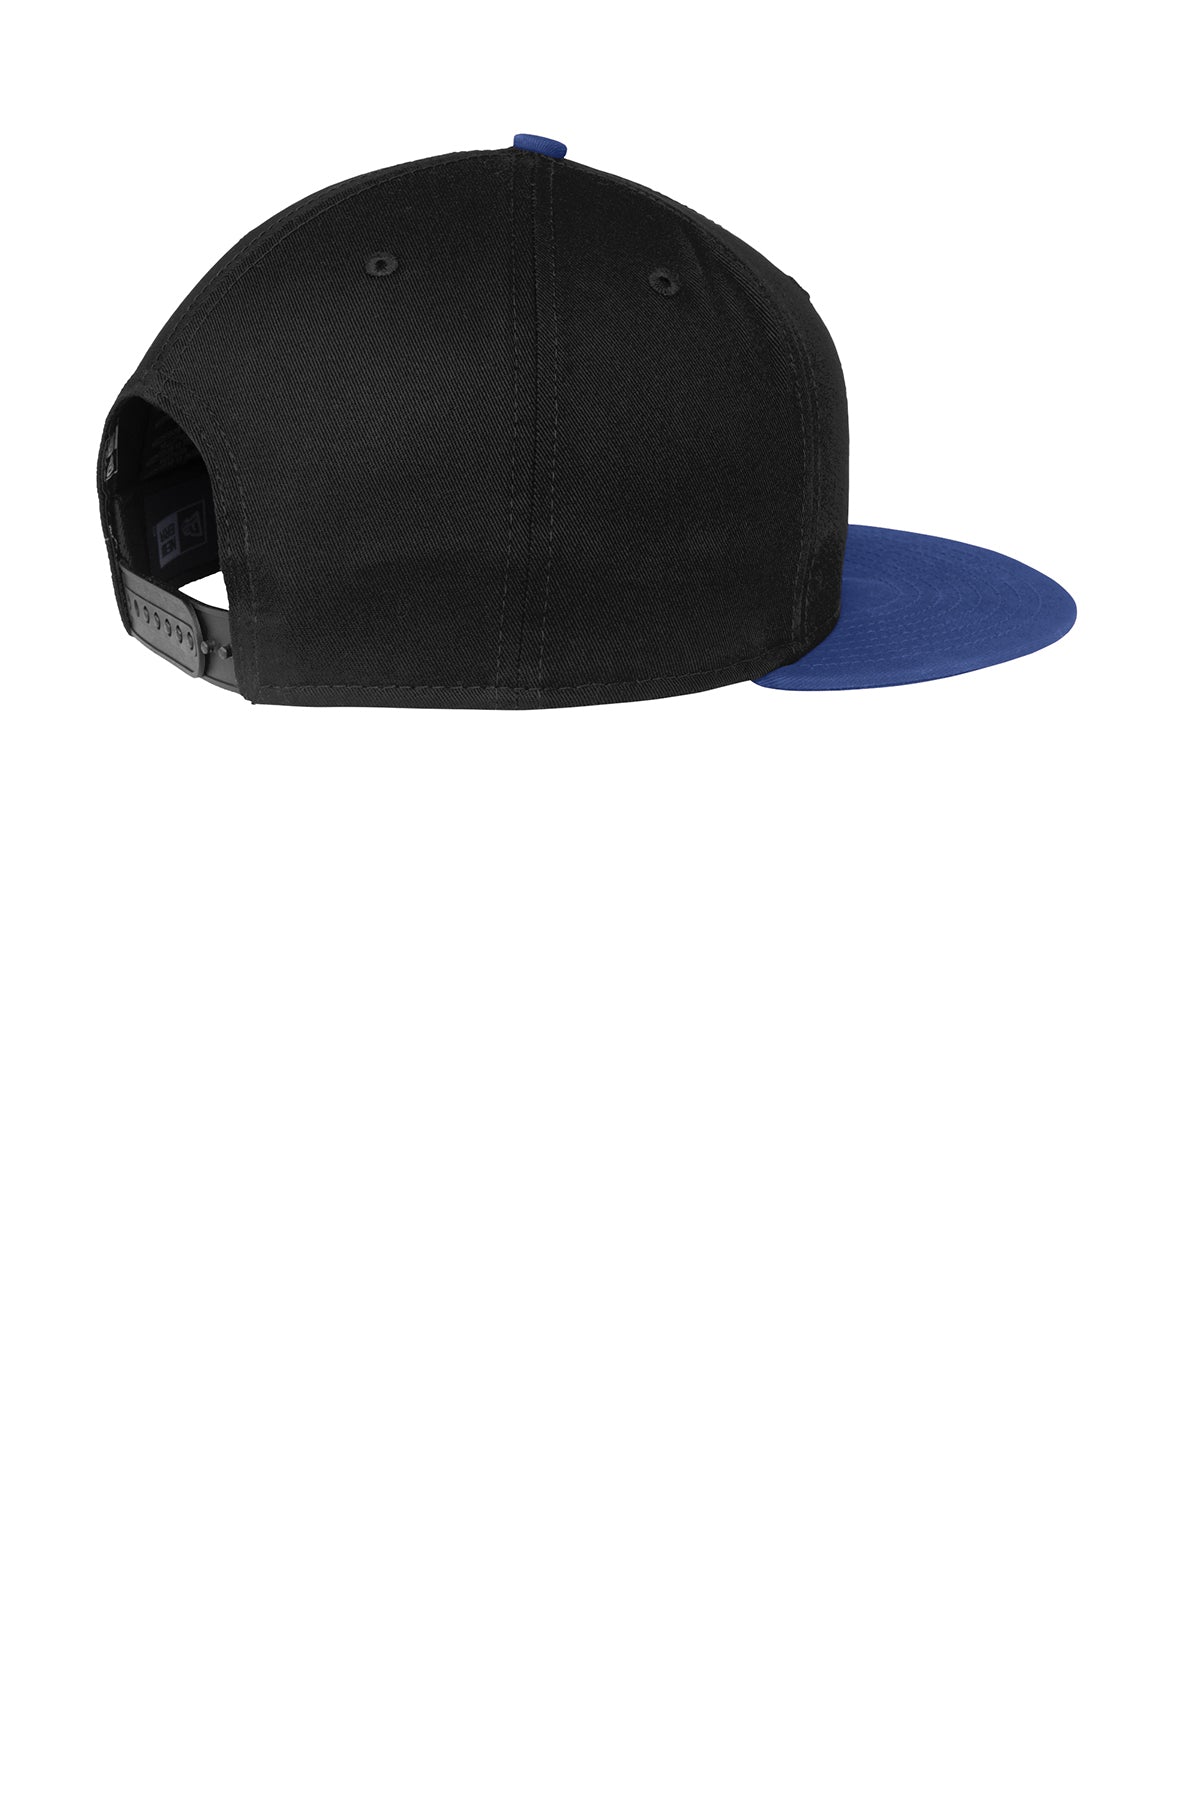 New Era Flat Bill Snapback Customized Caps, Black/ Royal